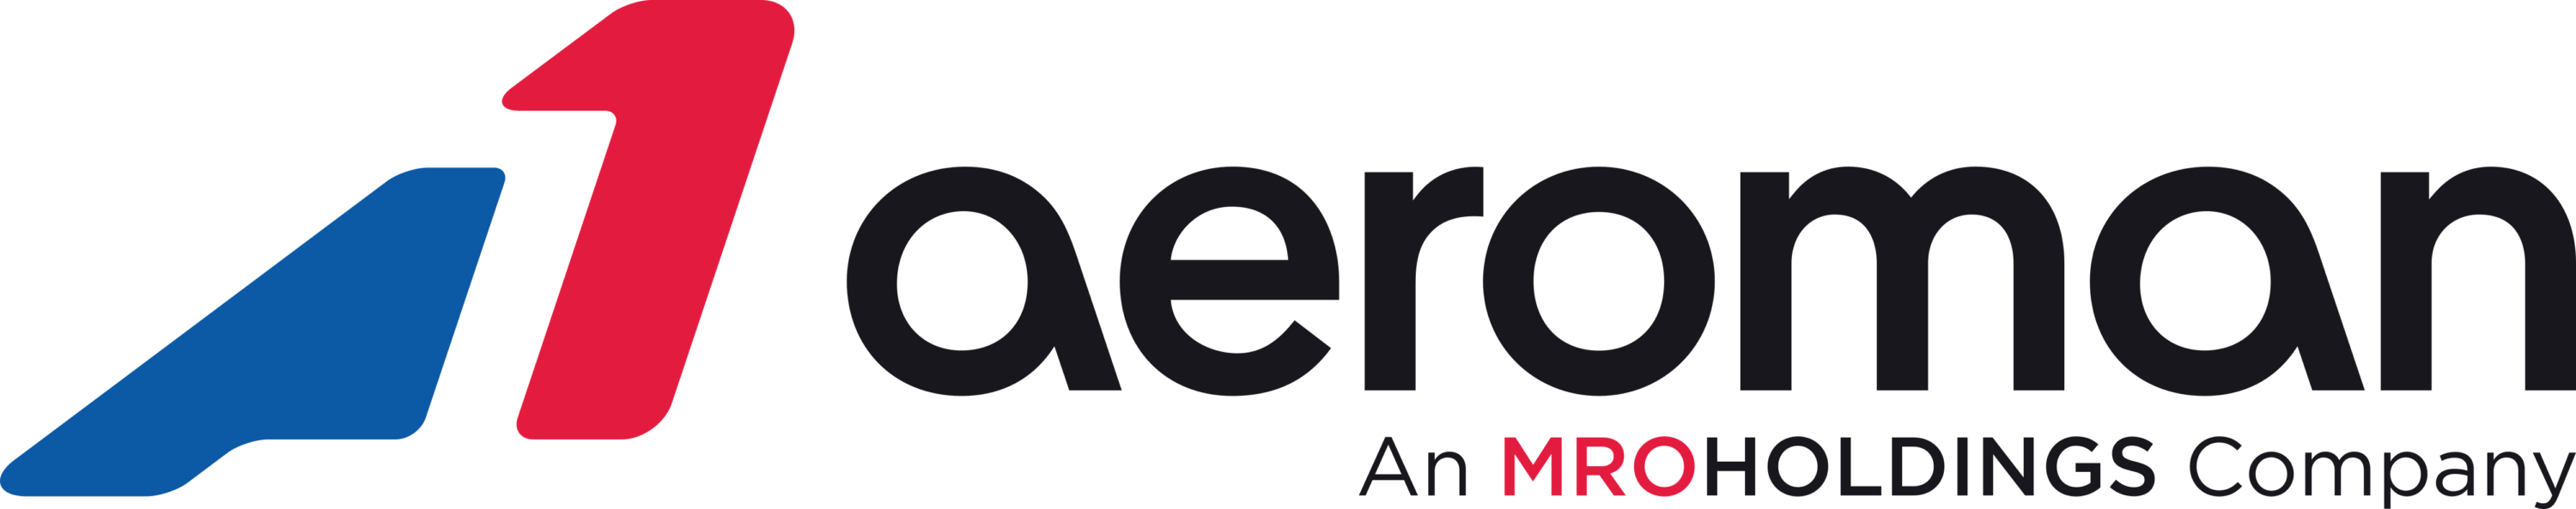 Aeroman Logo